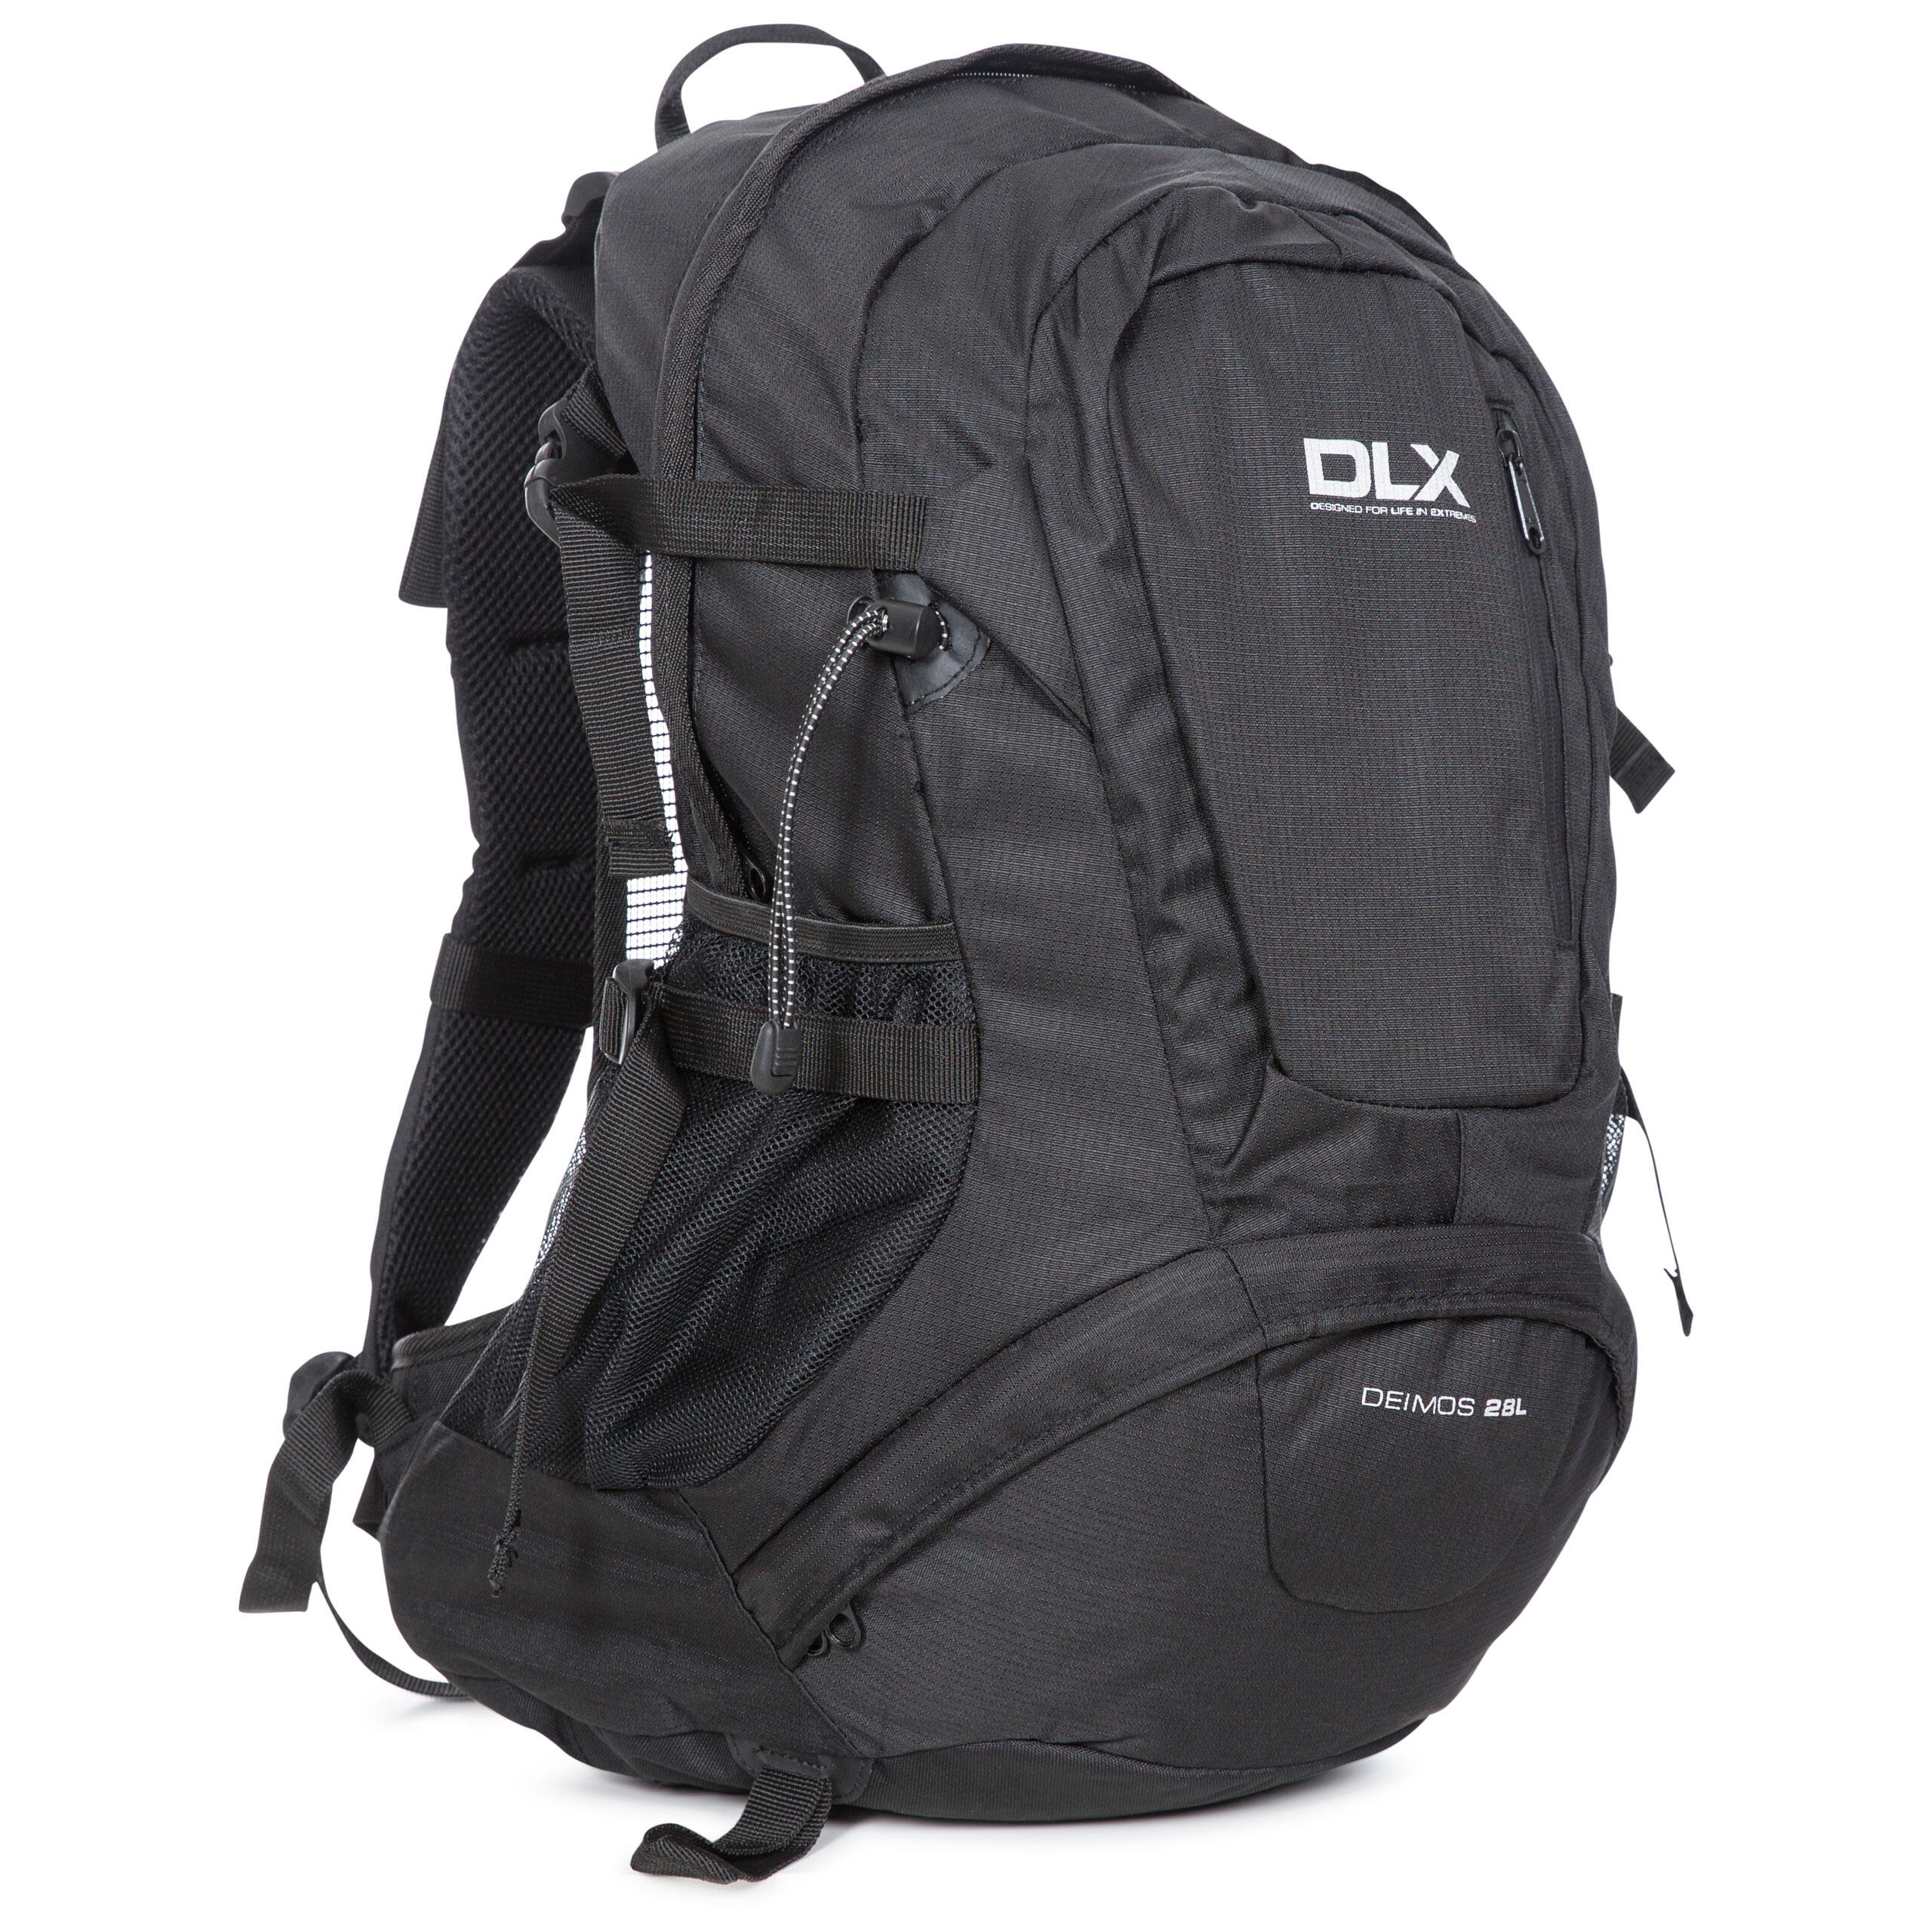 28L Hiking Rucksack Black Backpack Deimos 2/5